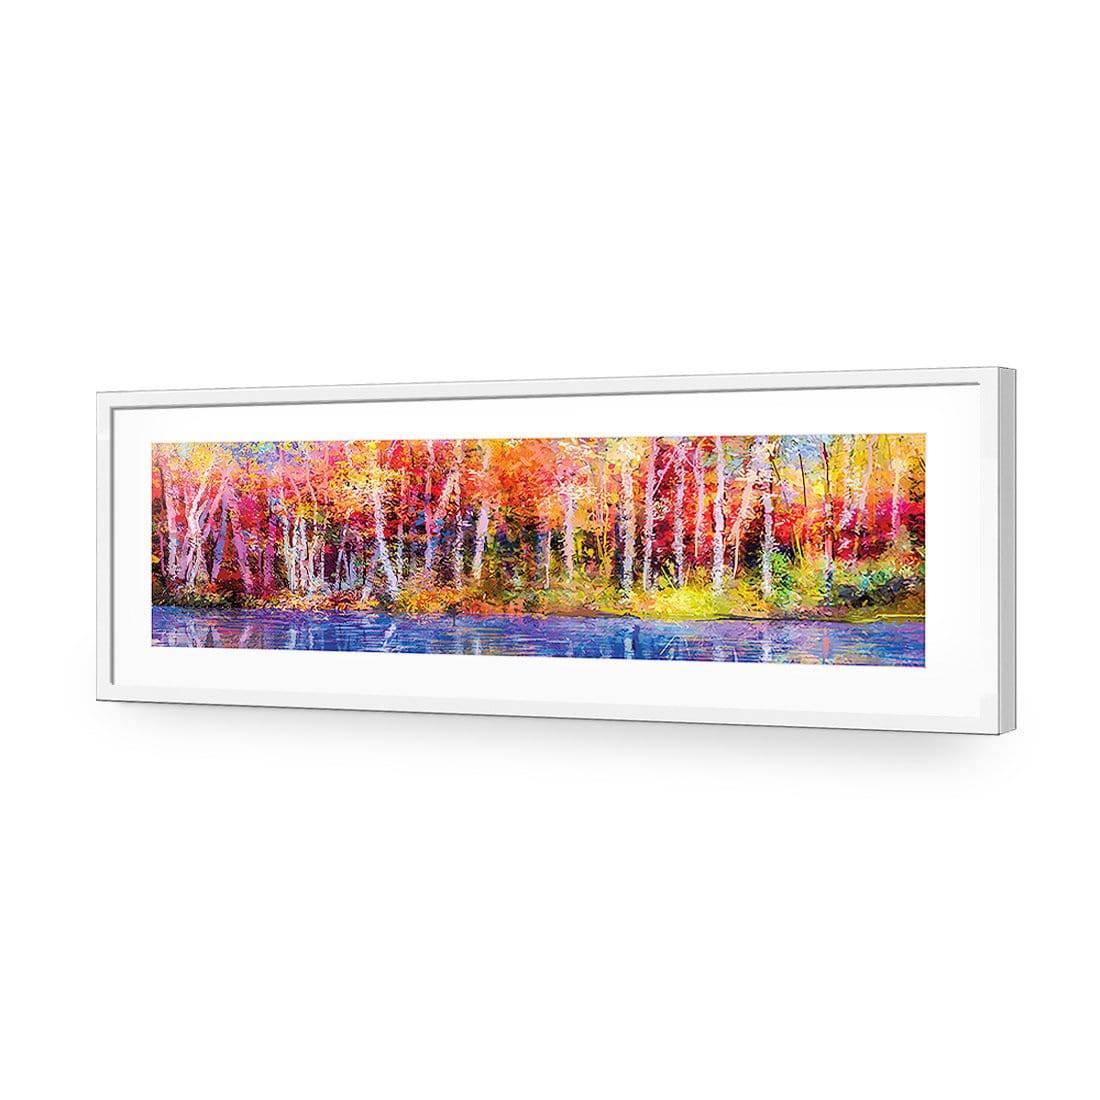 Rainbow Tree Forest, Long-Acrylic-Wall Art Design-With Border-Acrylic - White Frame-60x20cm-Wall Art Designs